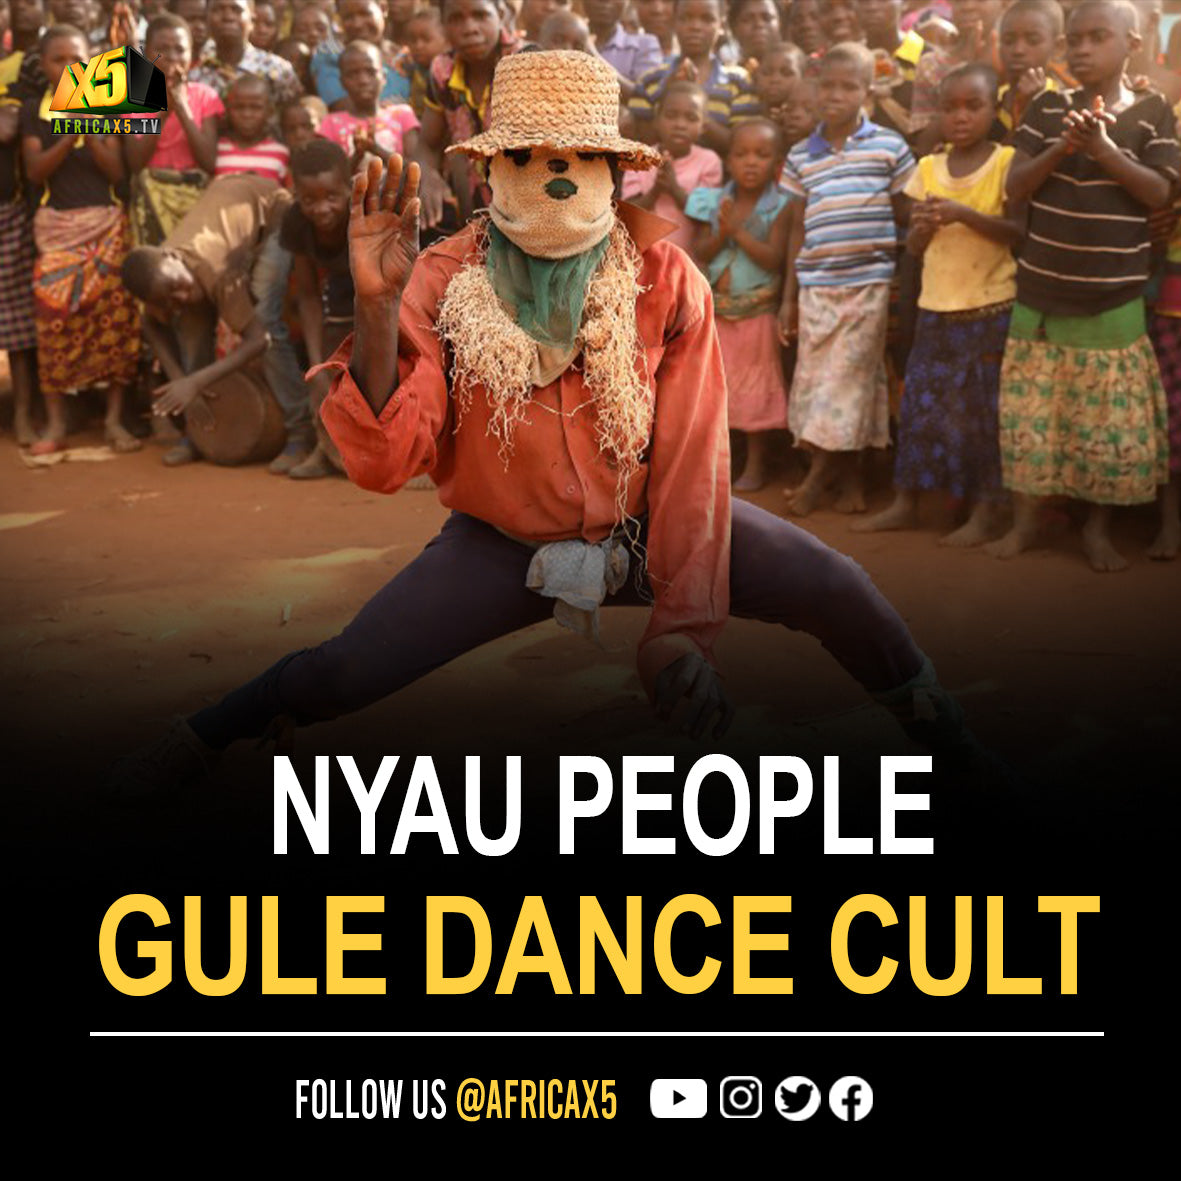 The Nyau people secret African society culture, Gule wamkulu dance cult